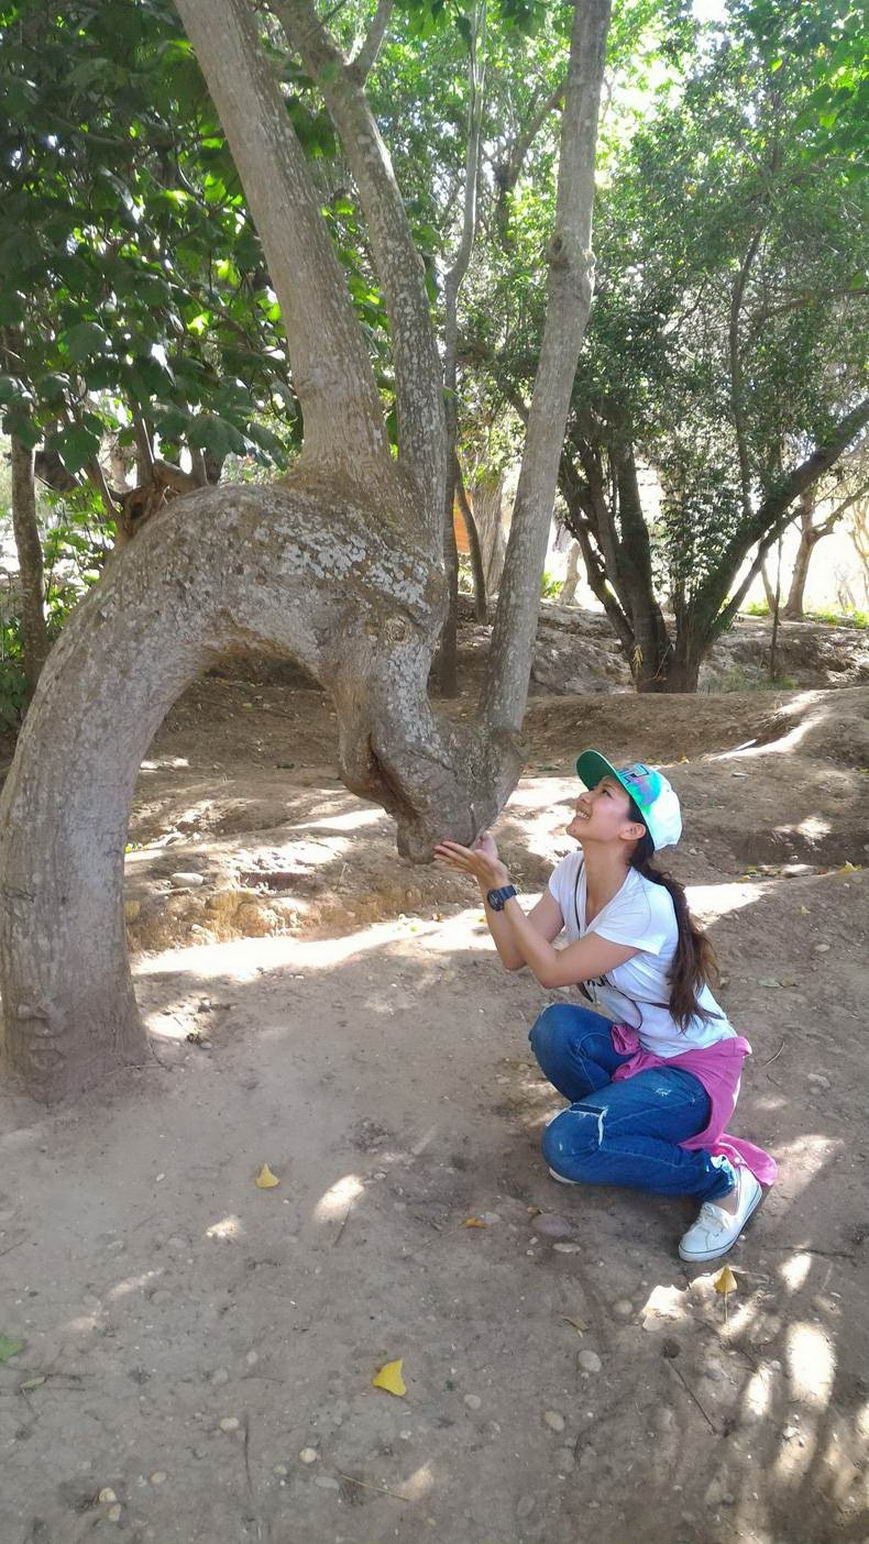 woman petting tree that looks like a dragon